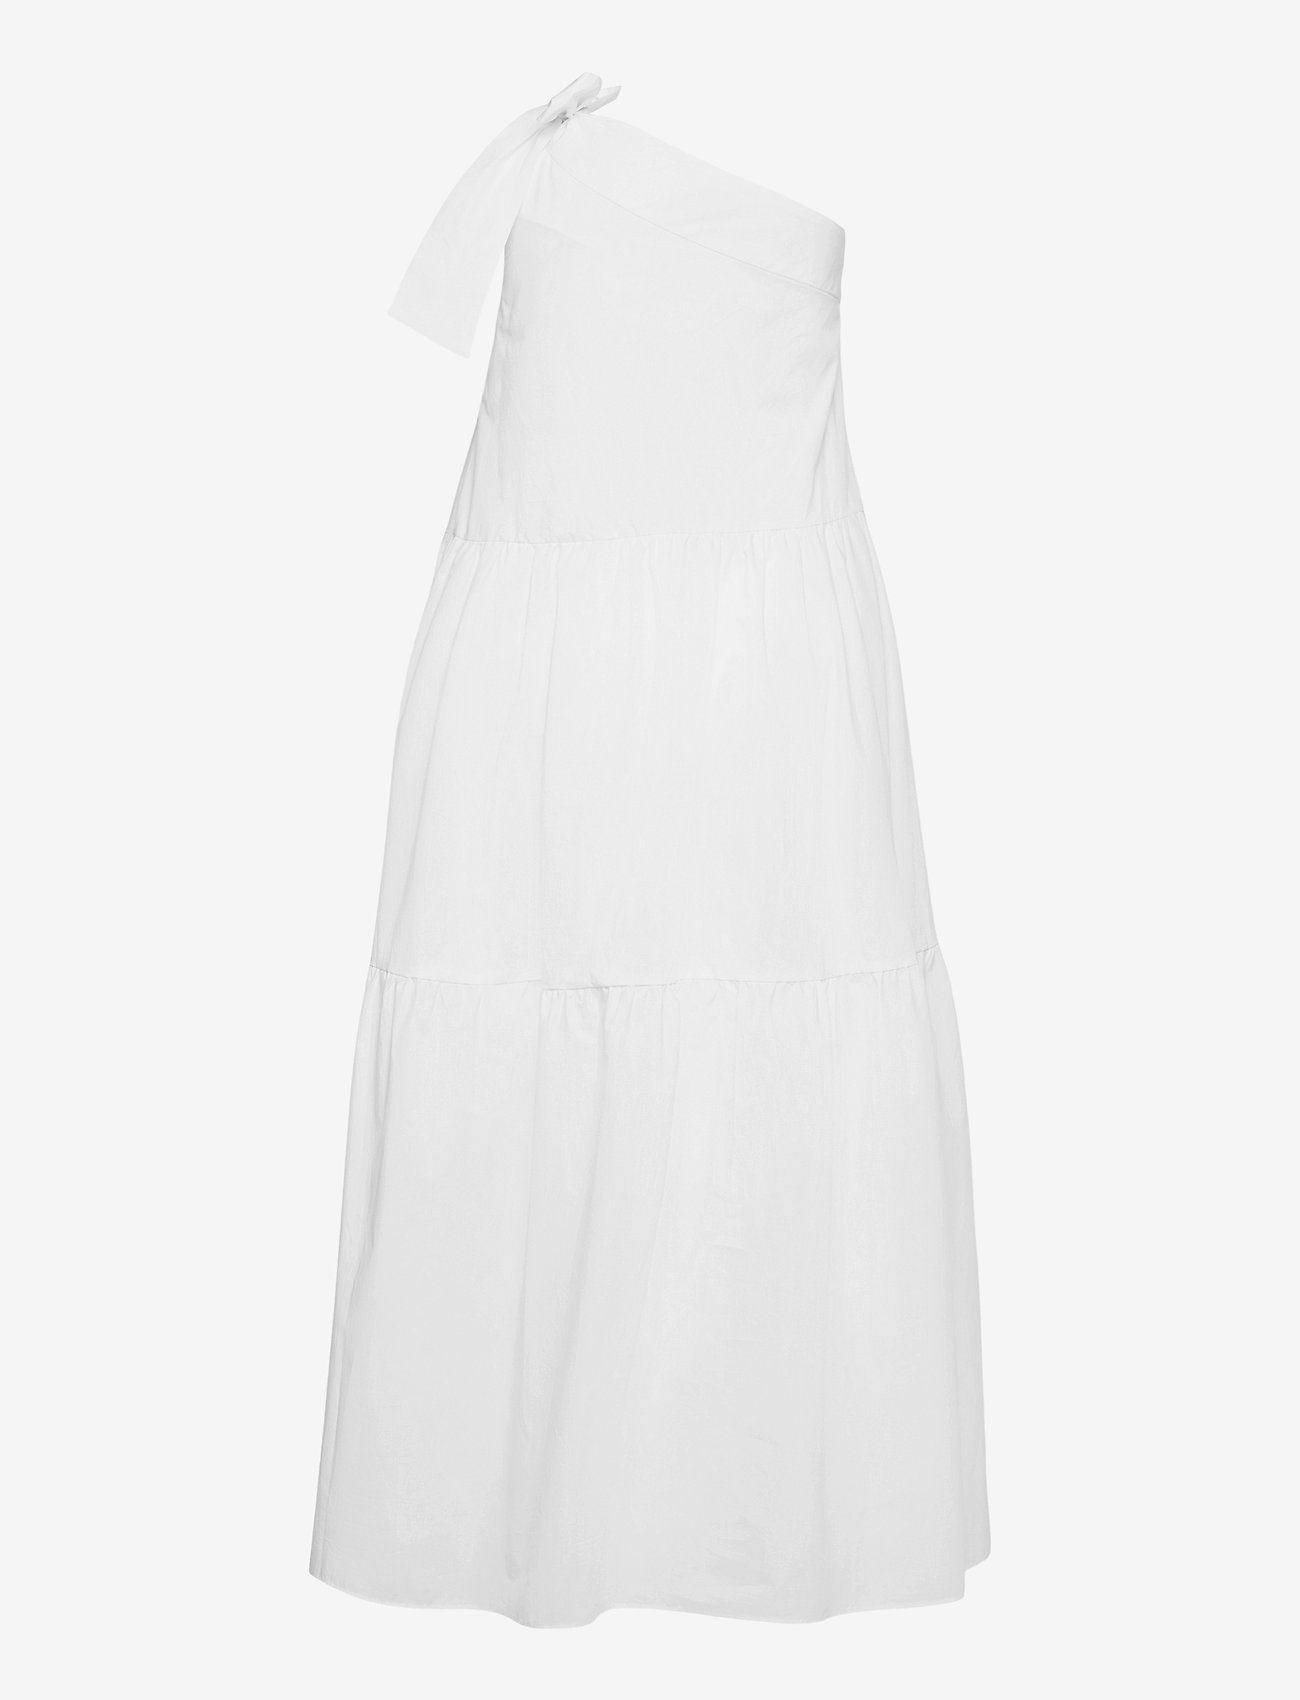 IVY OAK - ONE SHOULDER DRESS MAXI LENGHT - bright white - 1